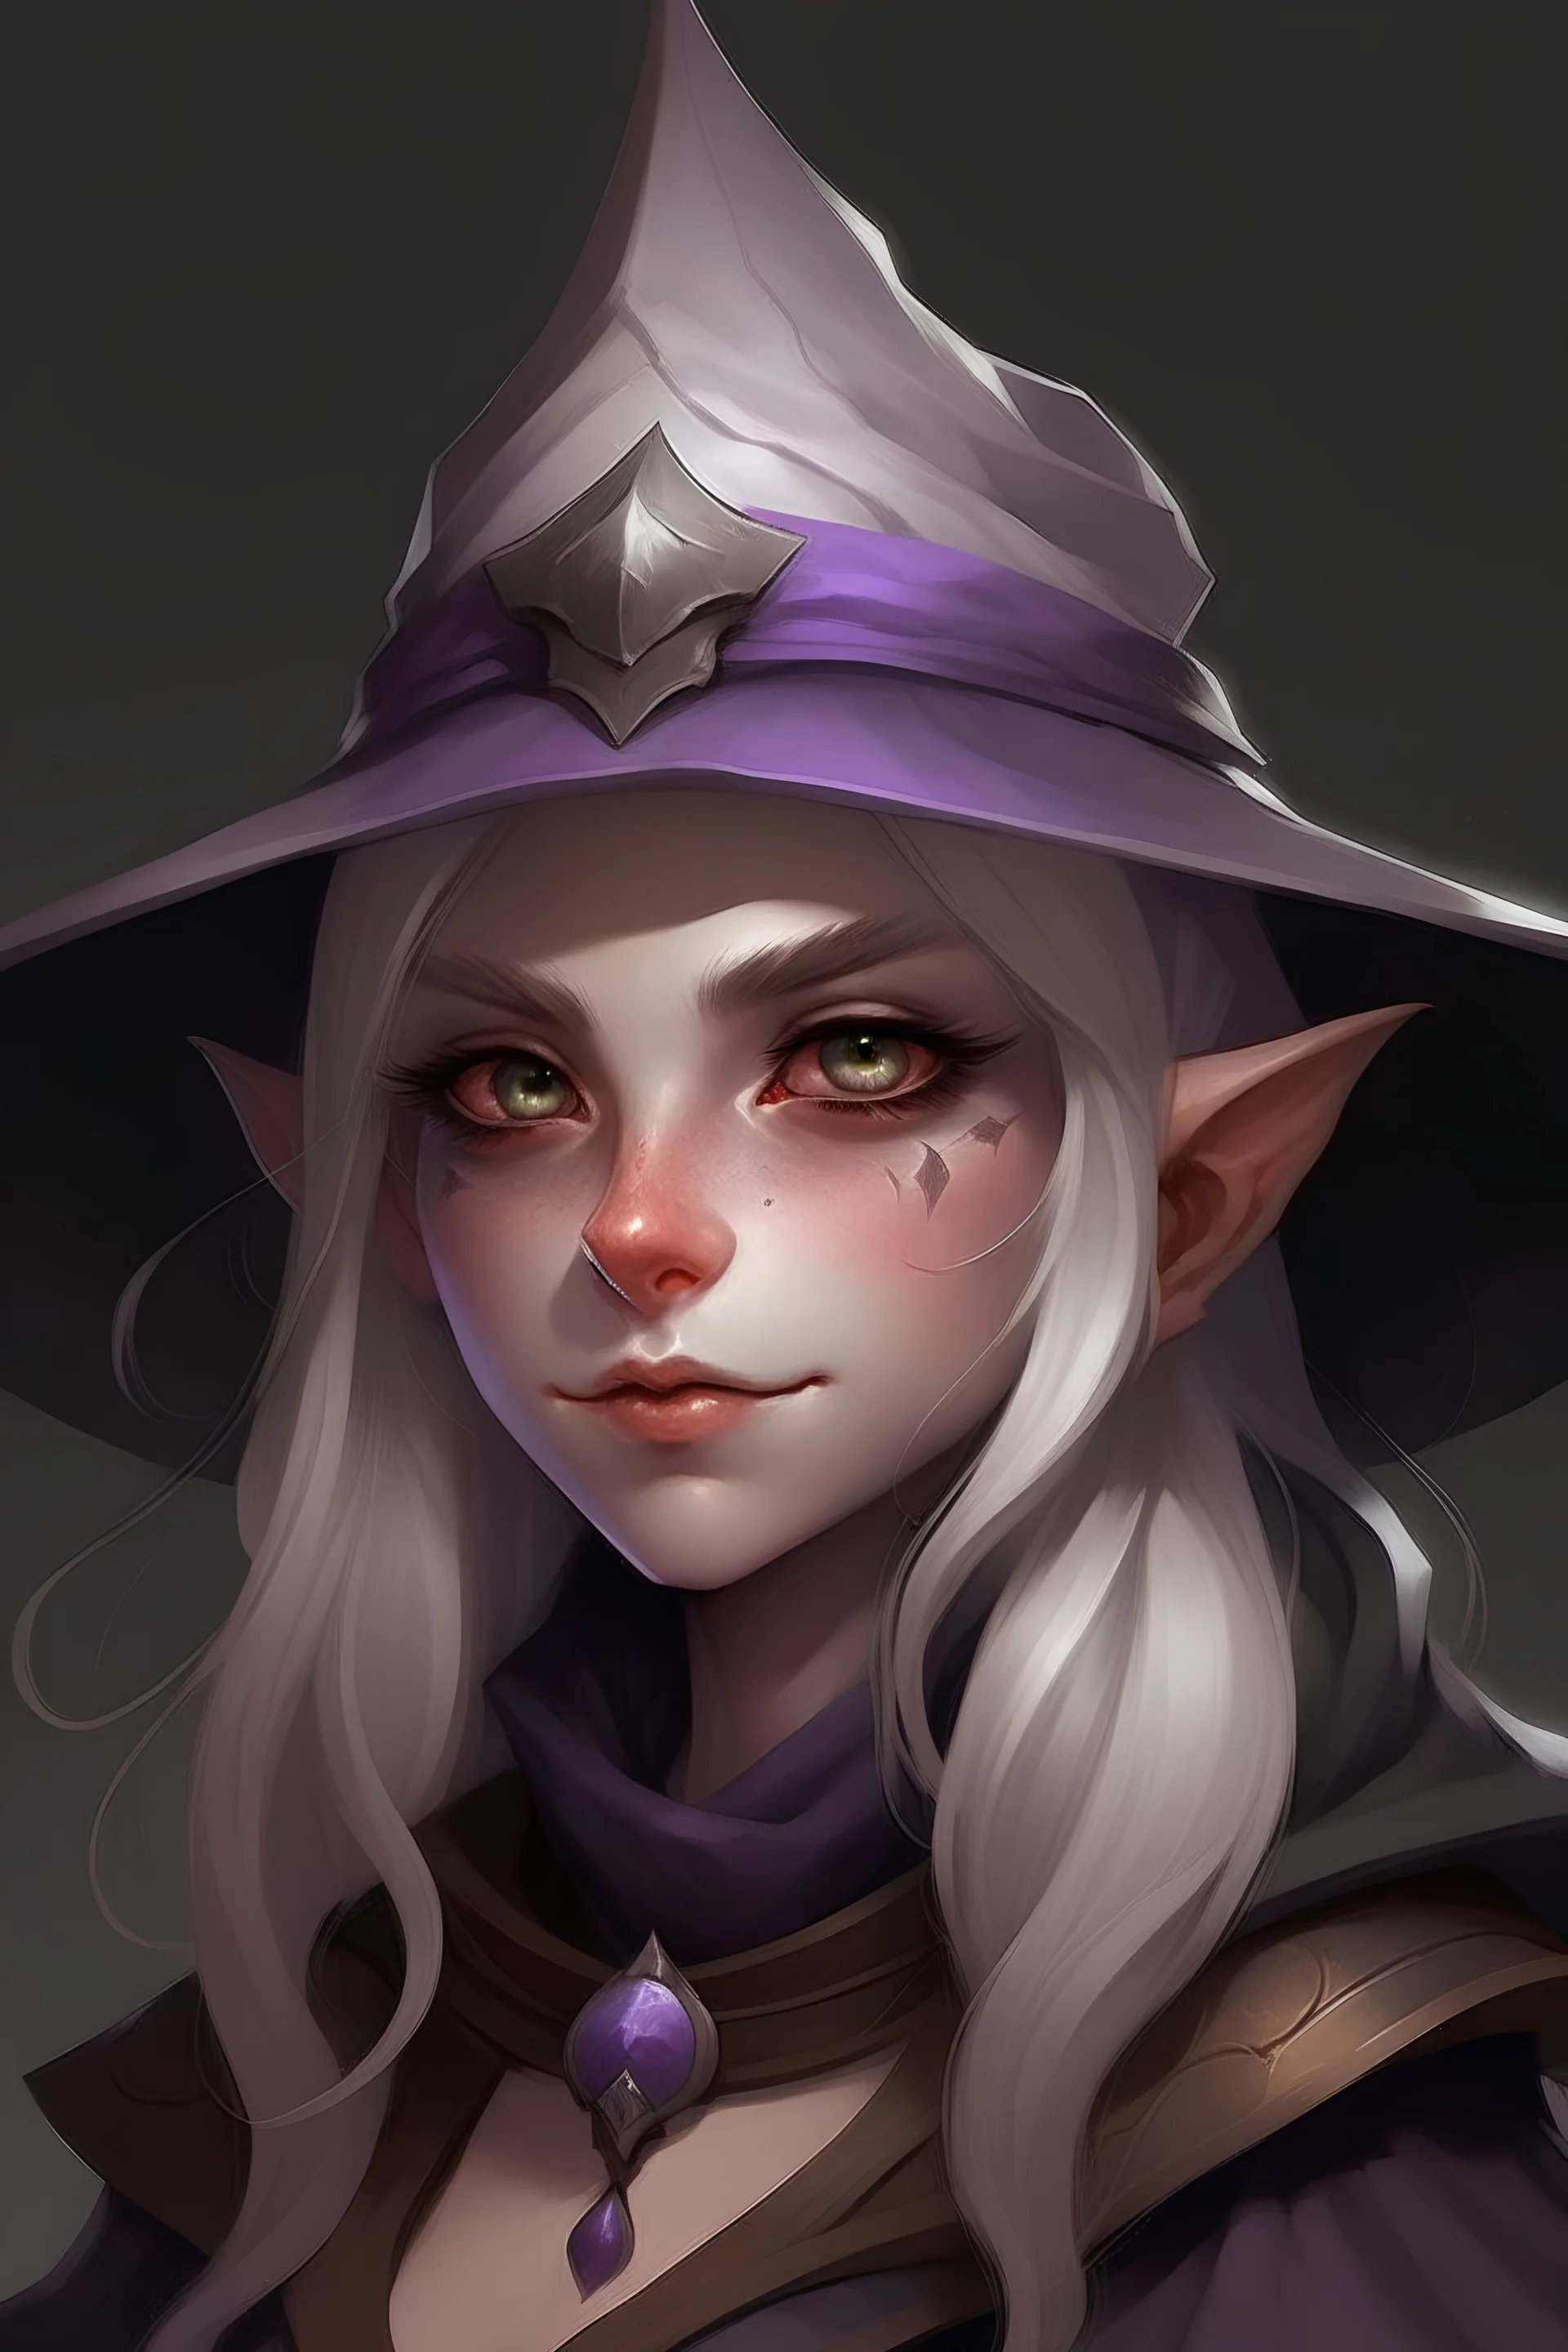 portrait dnd gnome, obsidian marble skin, purple eyes, white hair, ultra wide brim hat, female